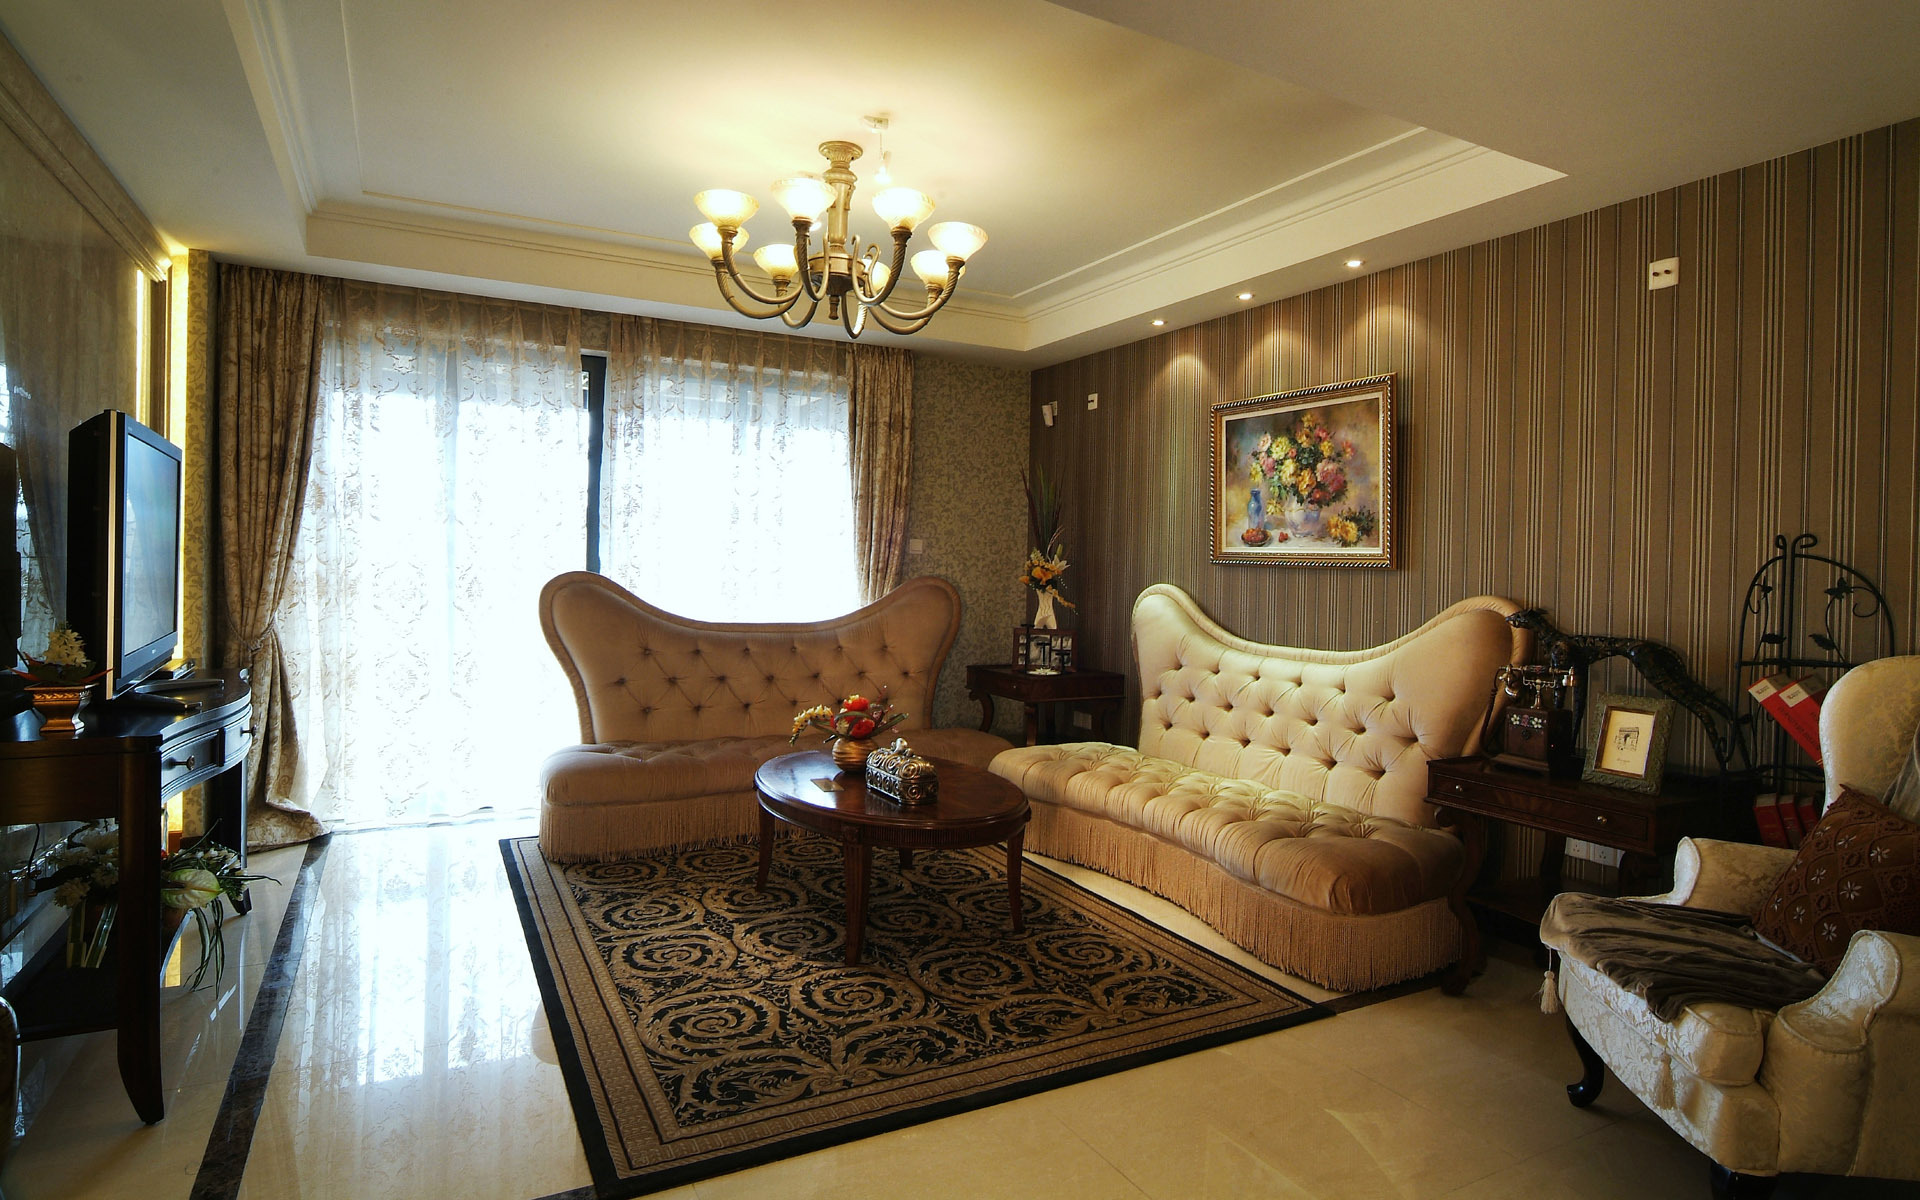 cozy living room interior